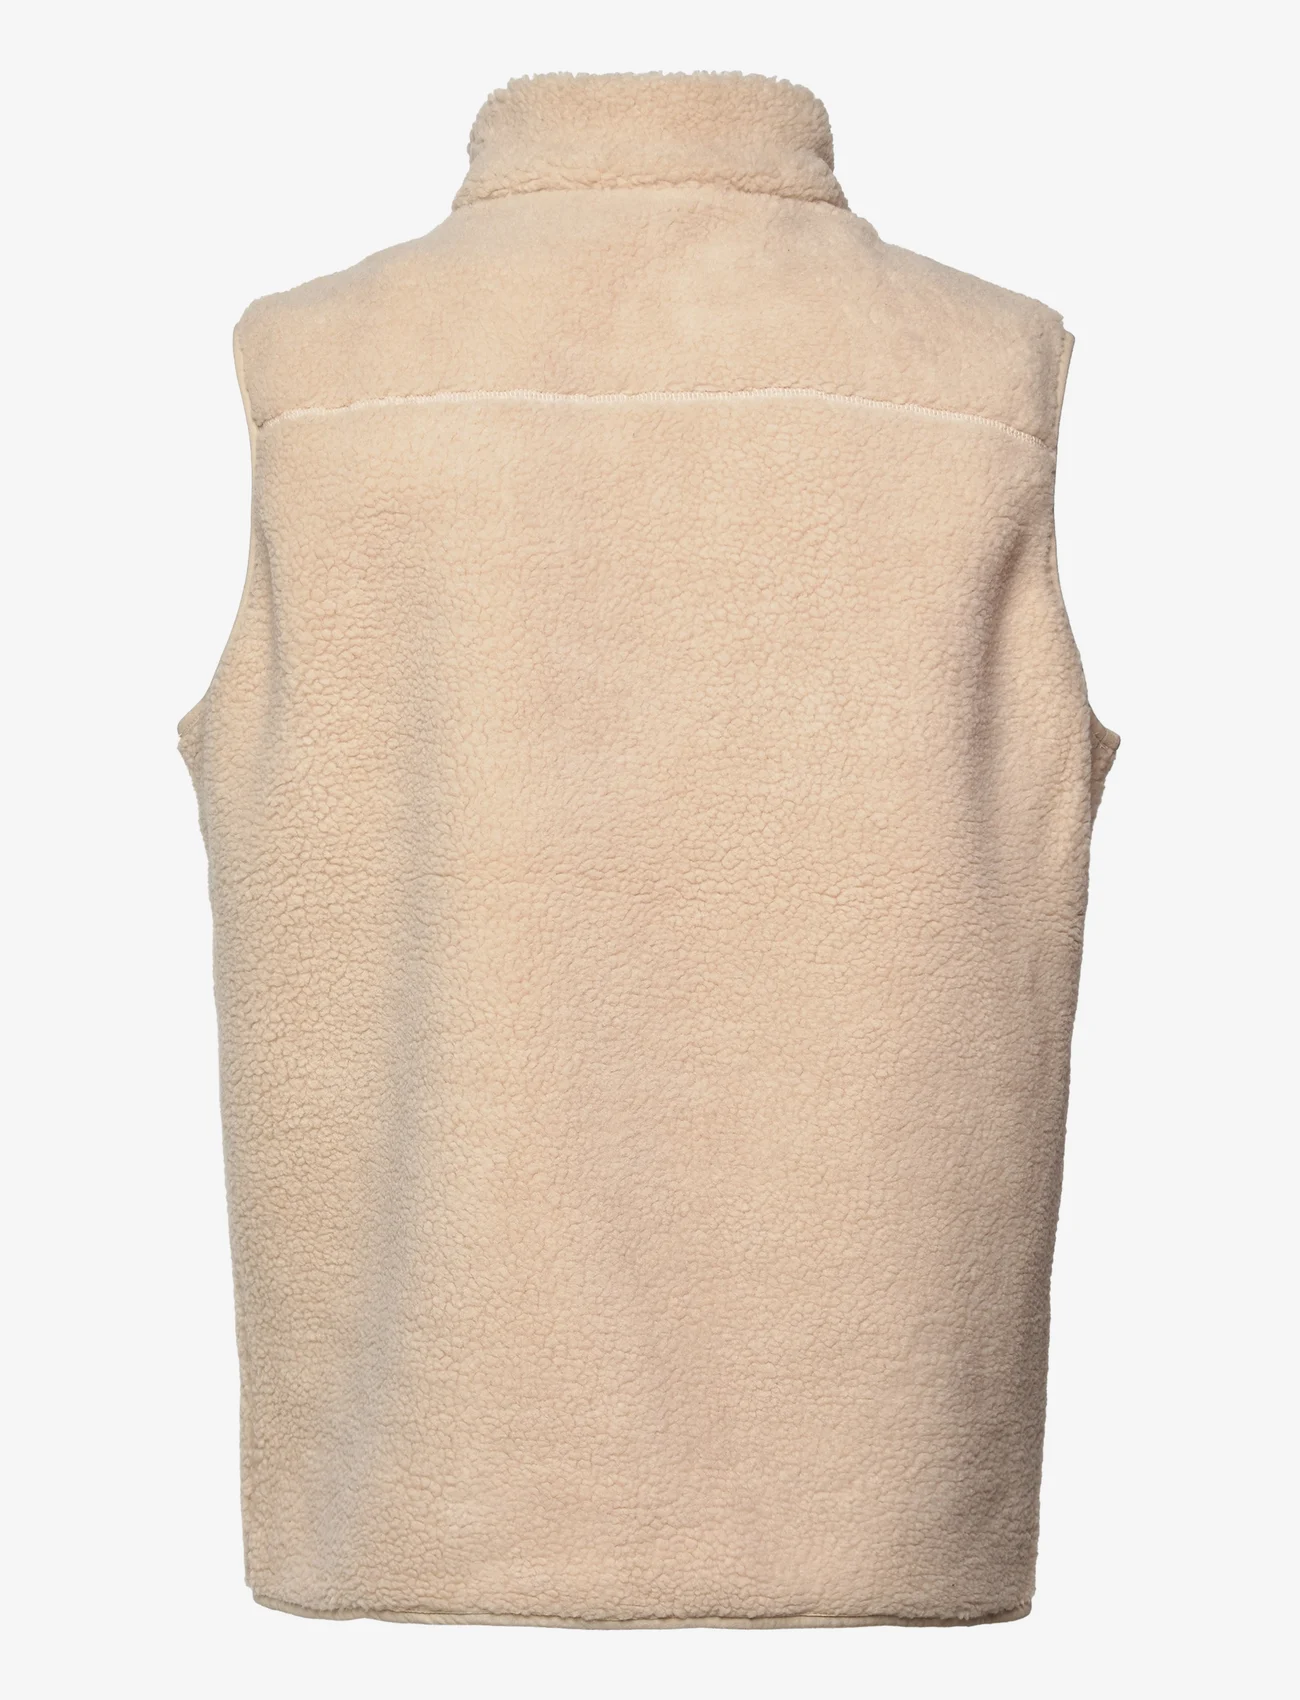 Knowledge Cotton Apparel - Teddy fleece vest - GRS/Vegan - westen - item colour - 1